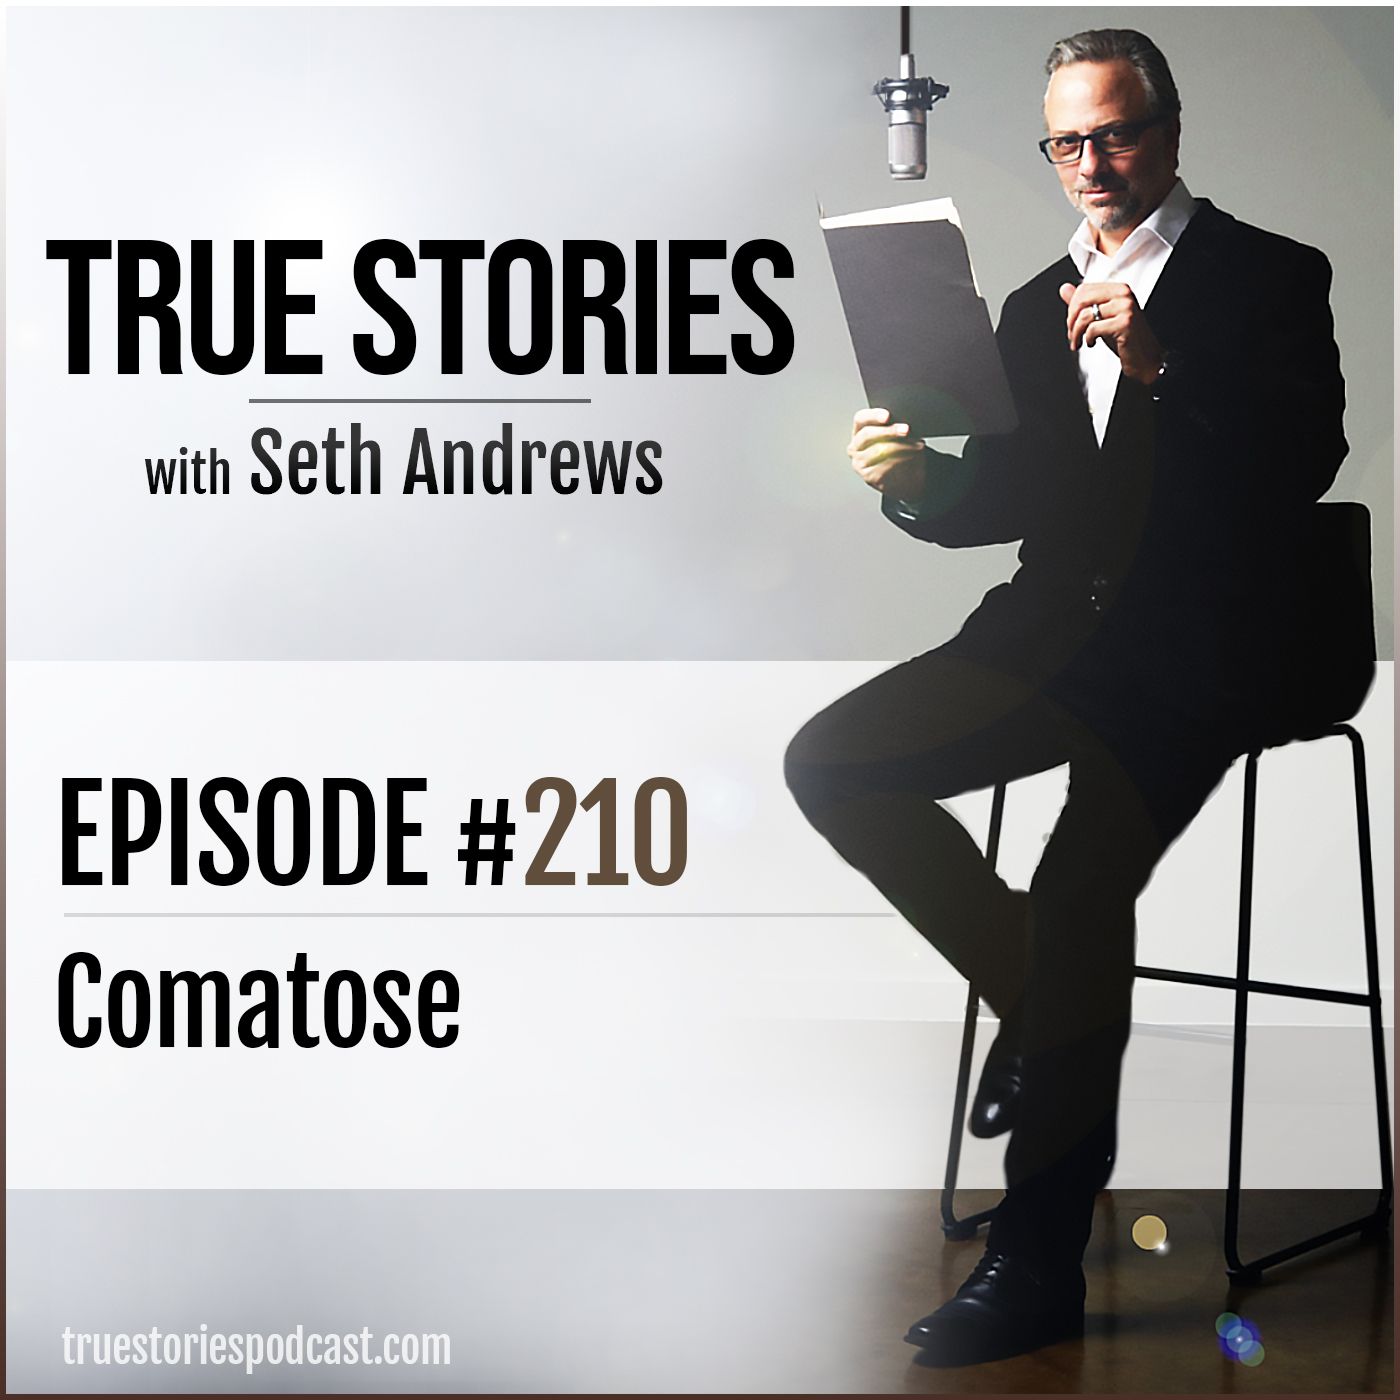 True Stories #210 - Comatose